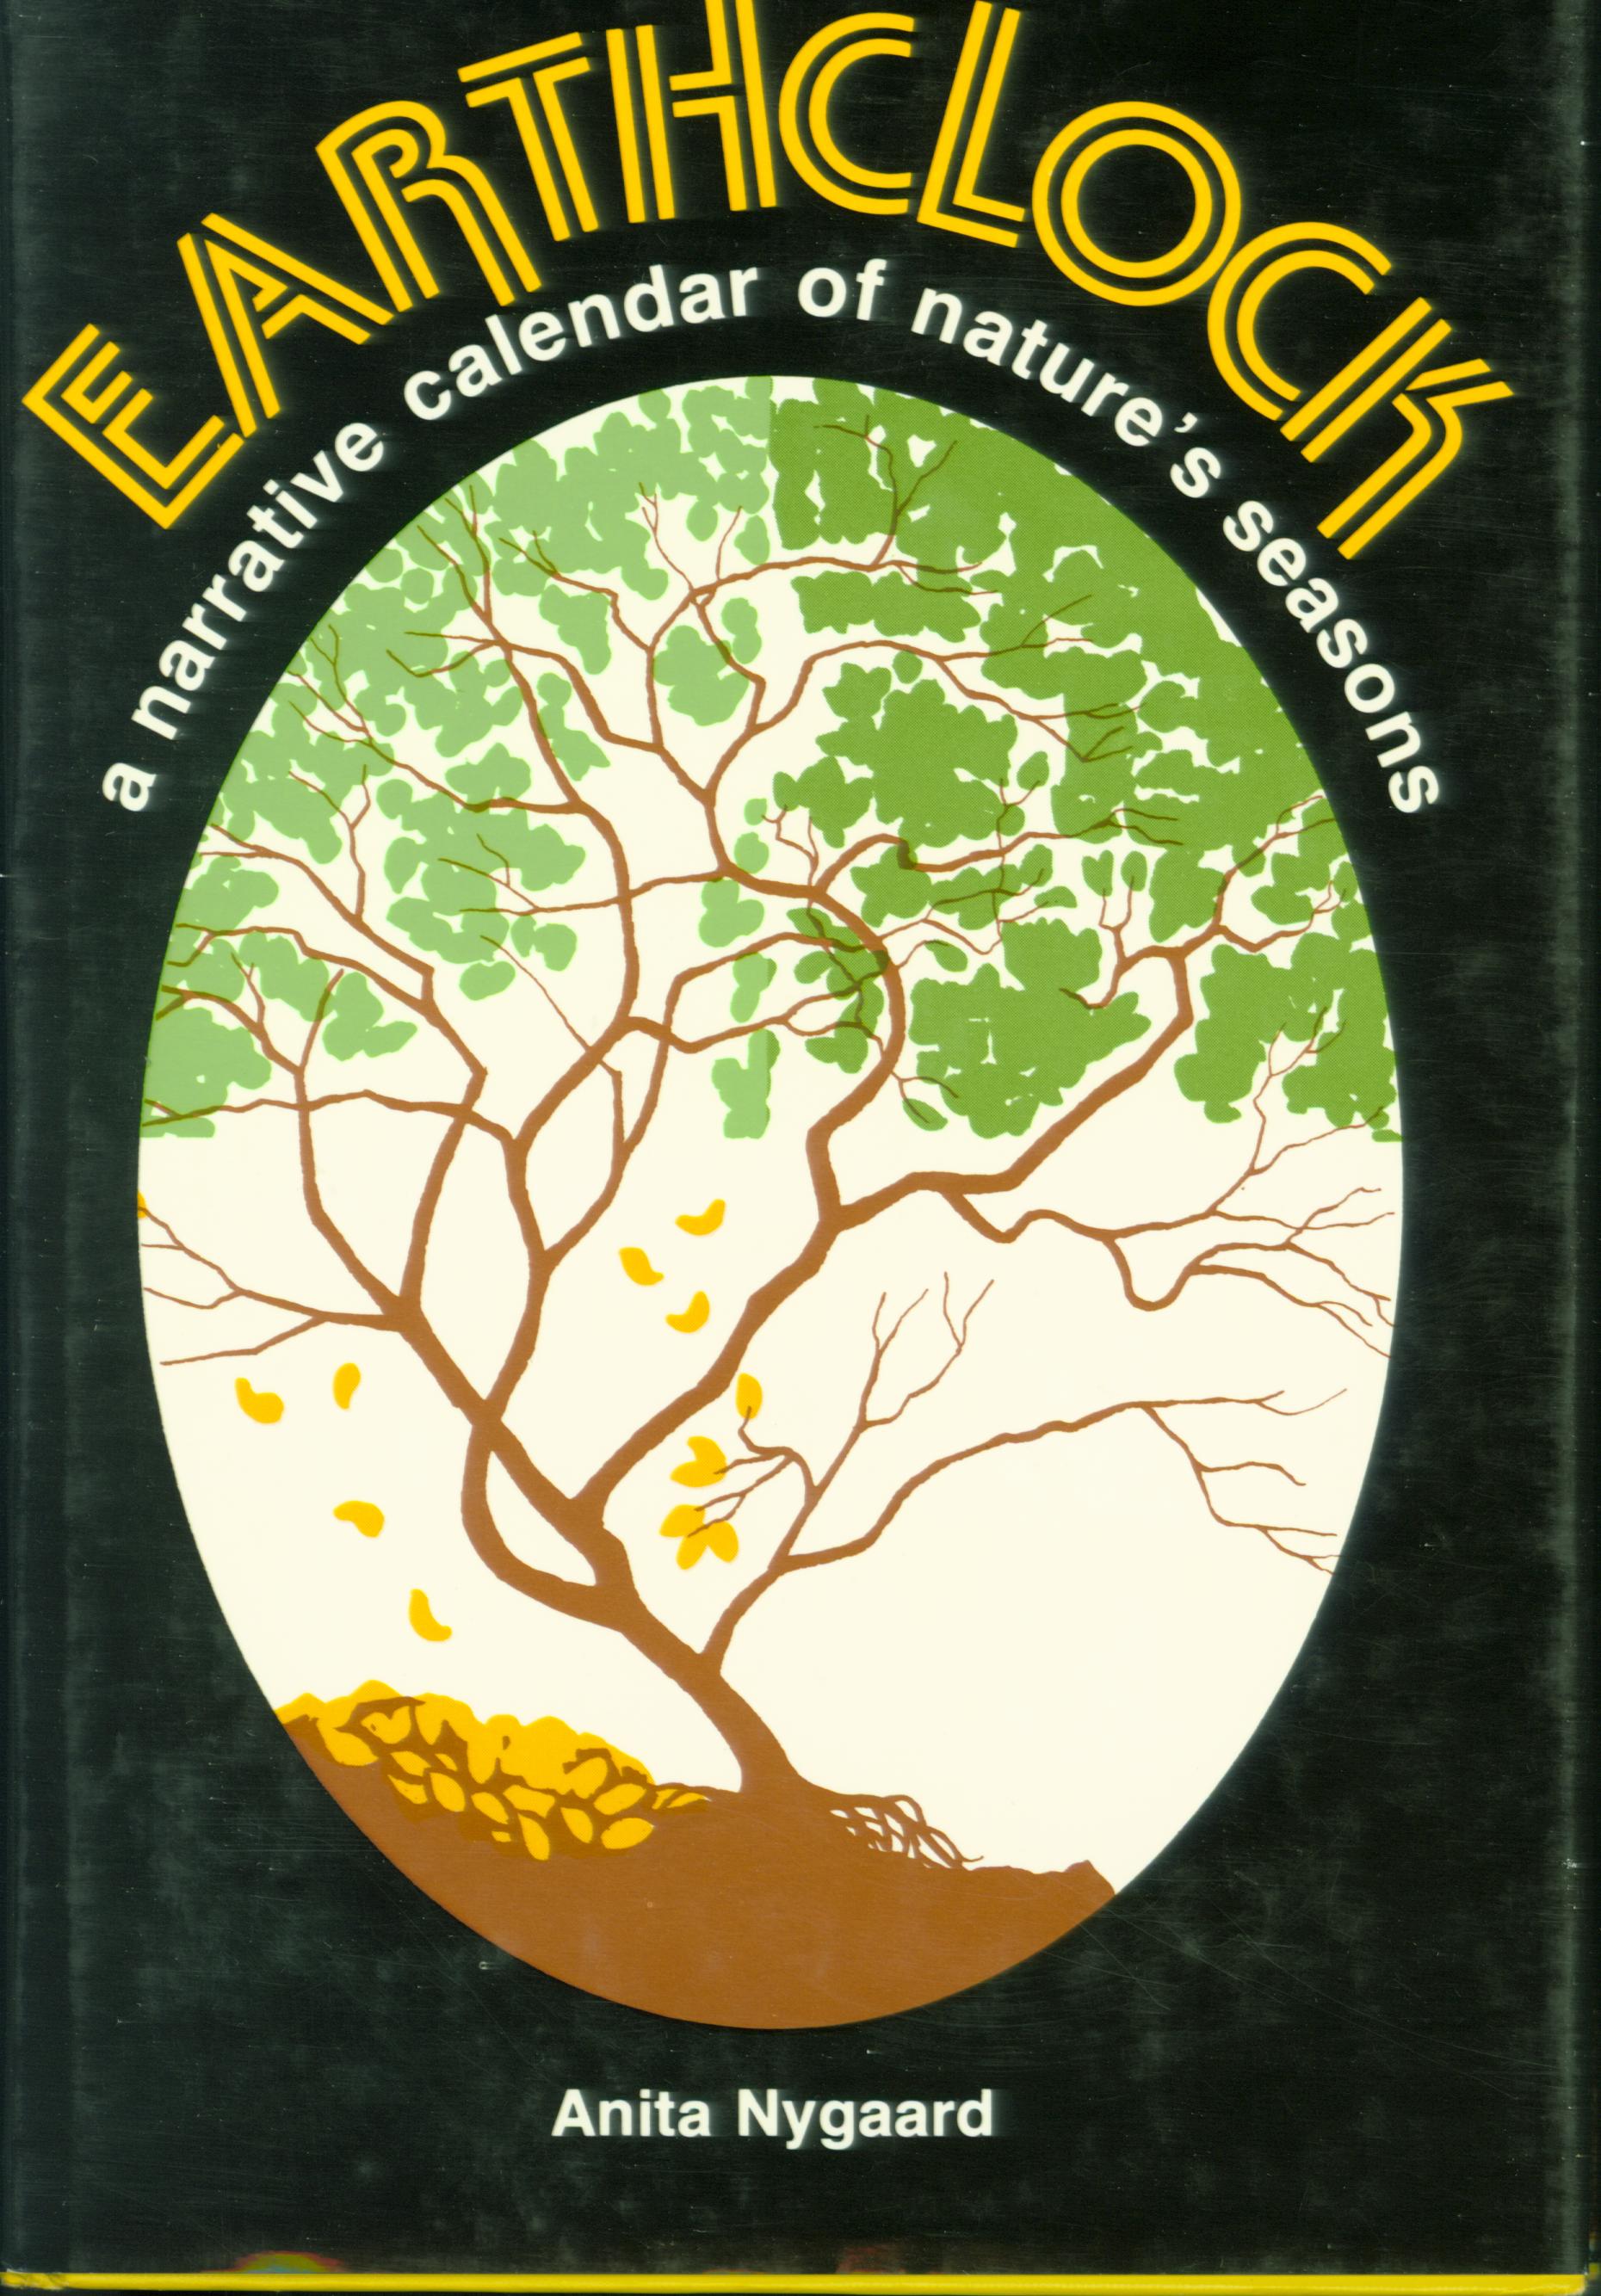 EARTHCLOCK: a narrative calendar of nature's seasons. 